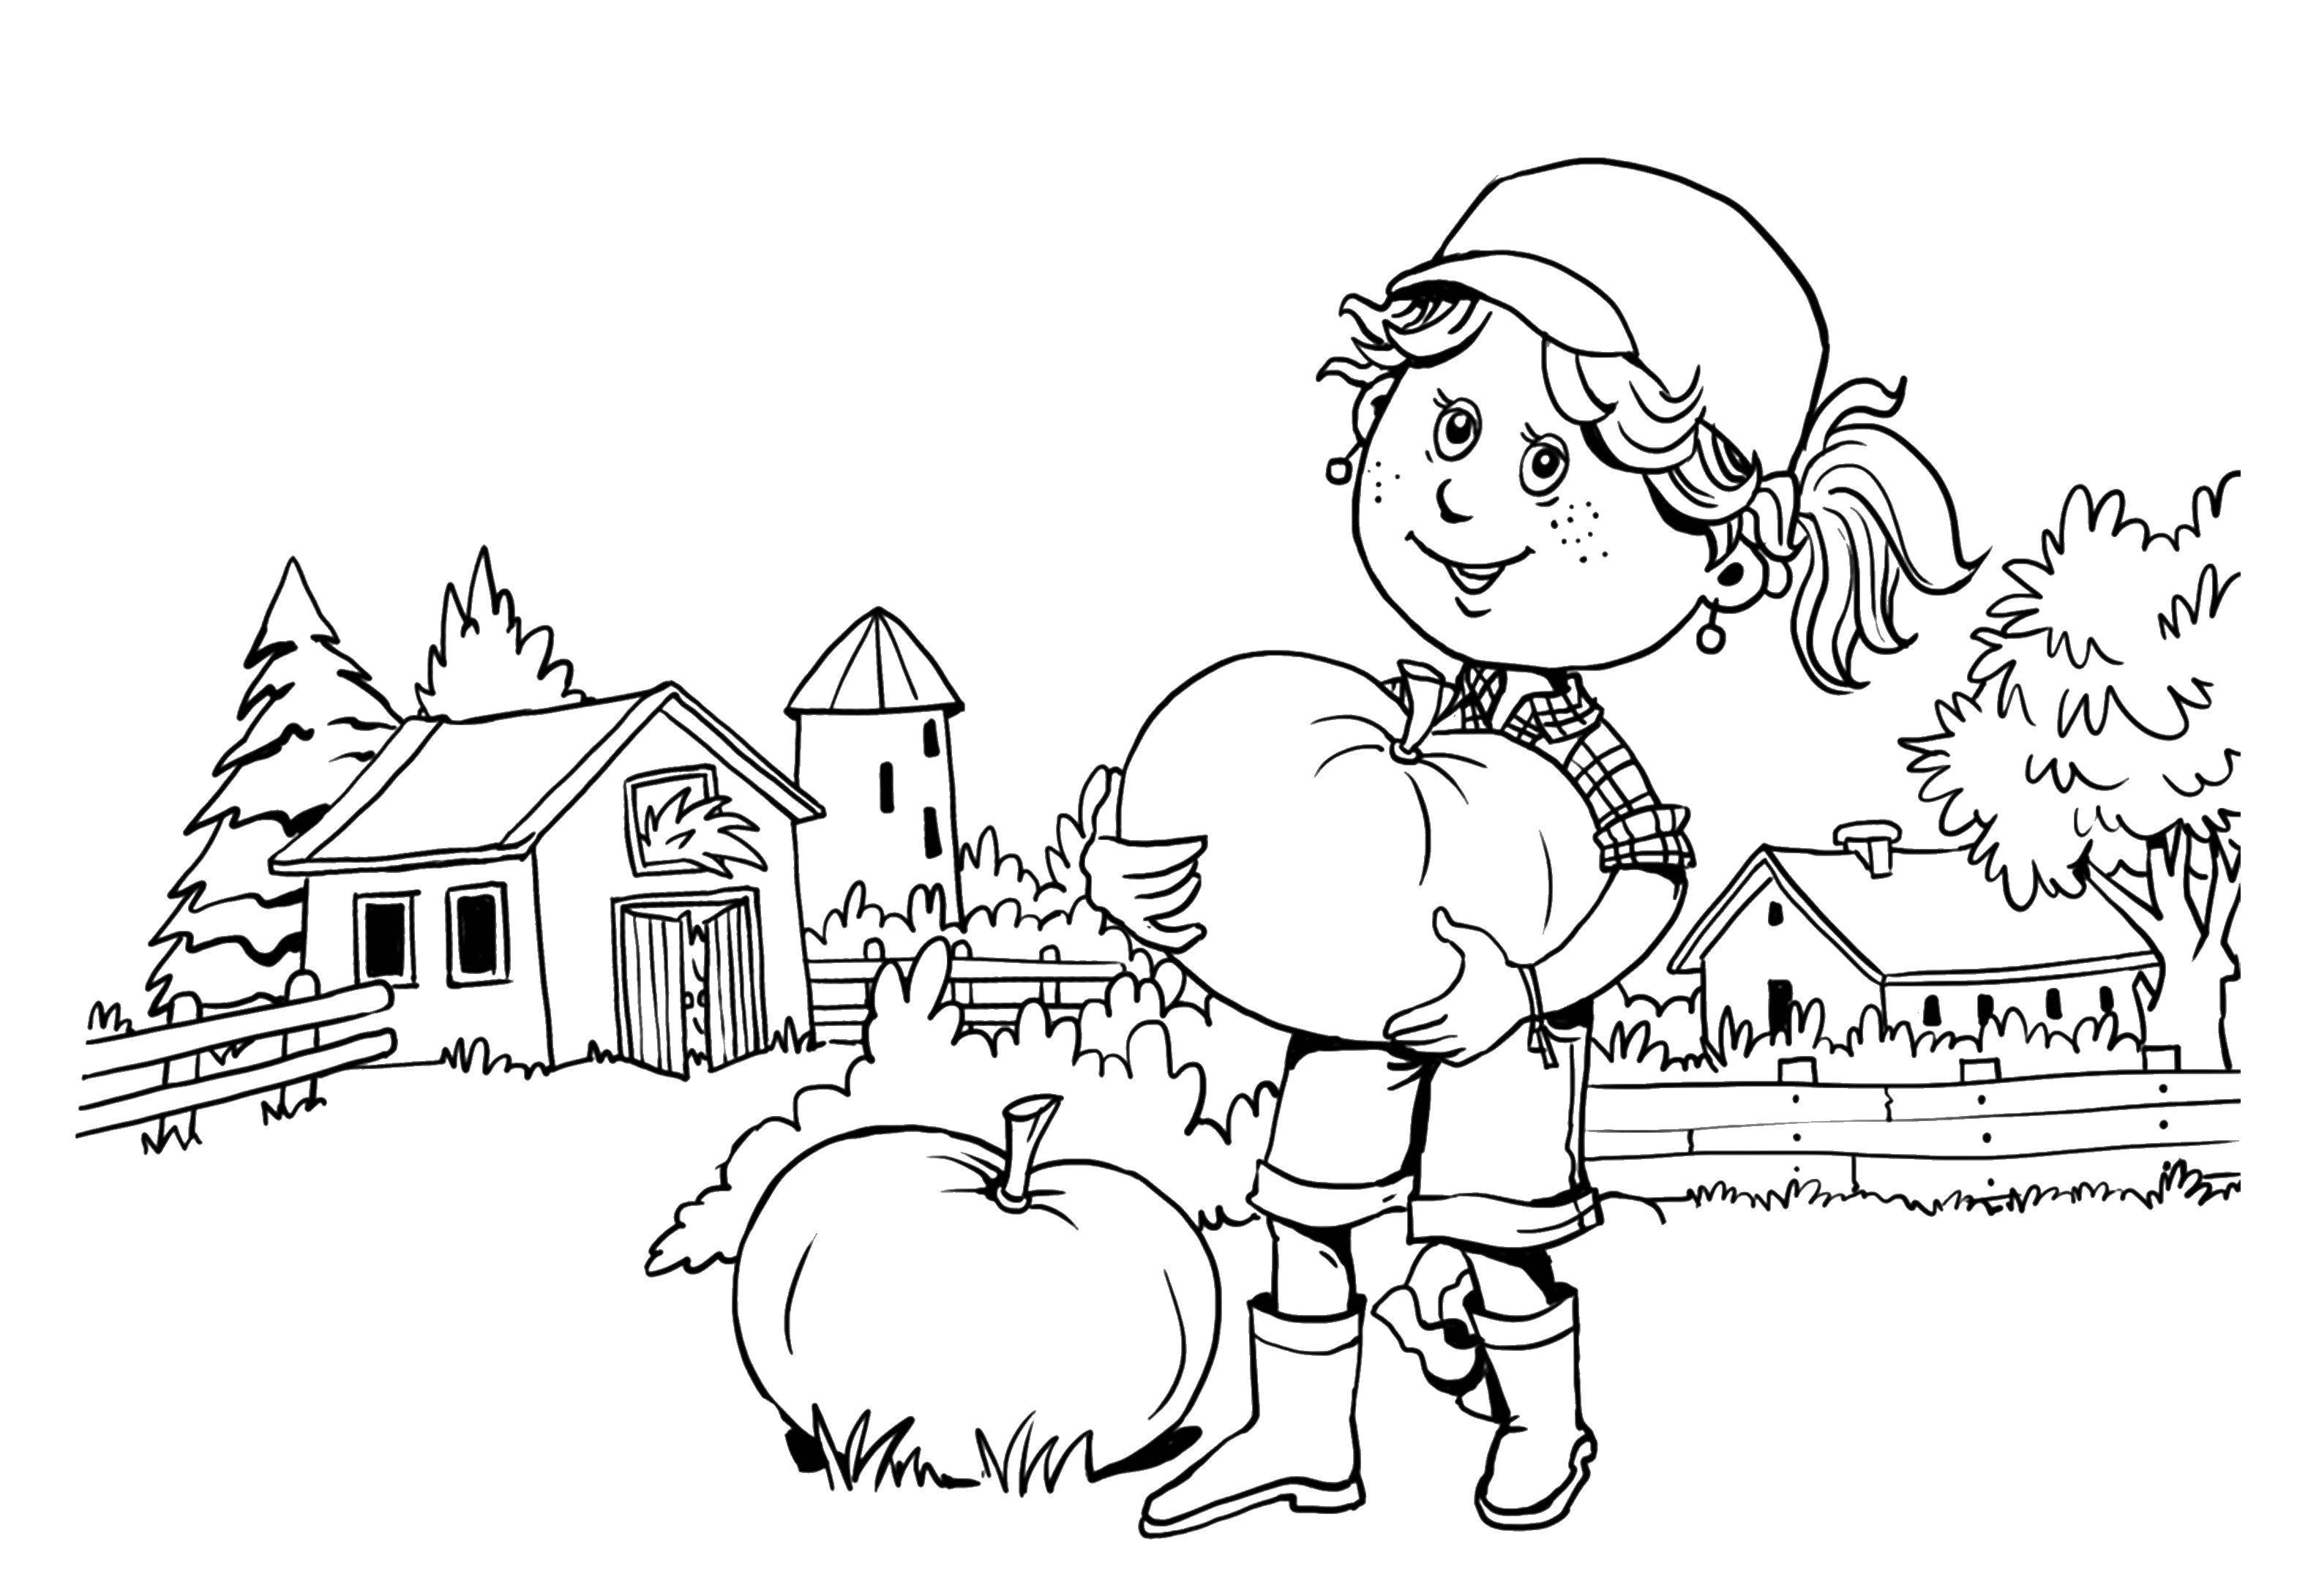 Coloring Girl picking pumpkins. Category vegetables. Tags:  pumpkin, girl.